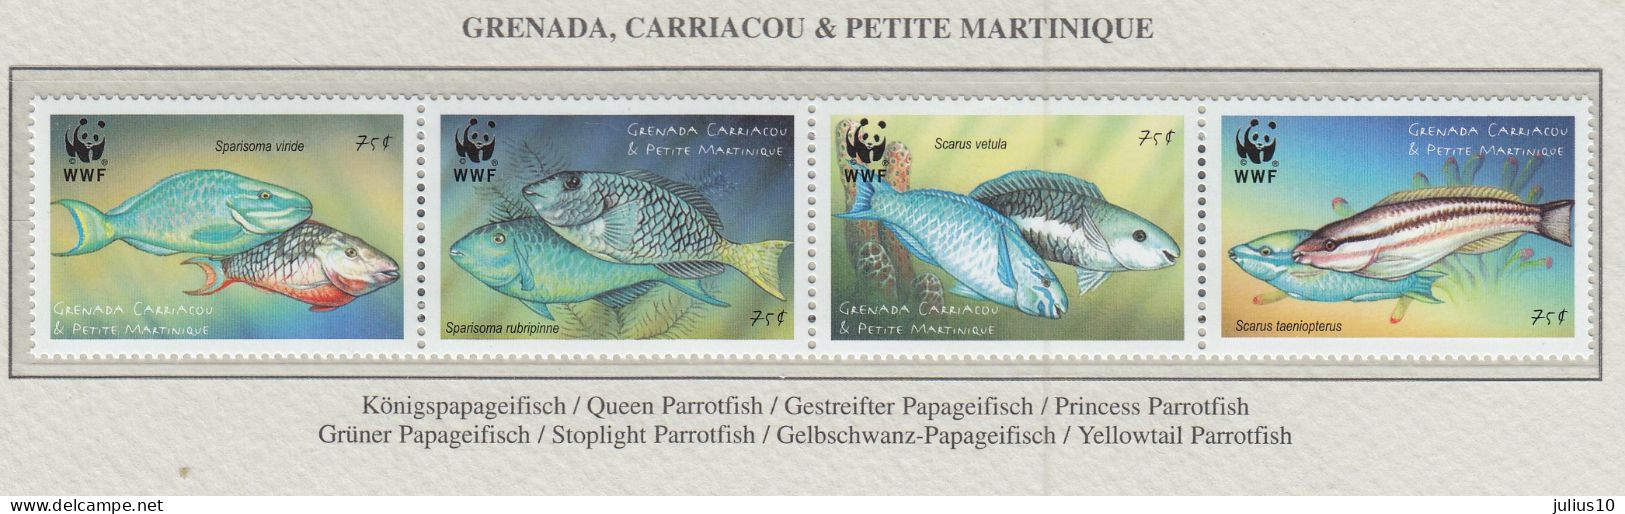 GRENADA GRENADINES 2001  WWF Fishes Mi 3504-3507 MNH(**) Fauna 635 - Fishes